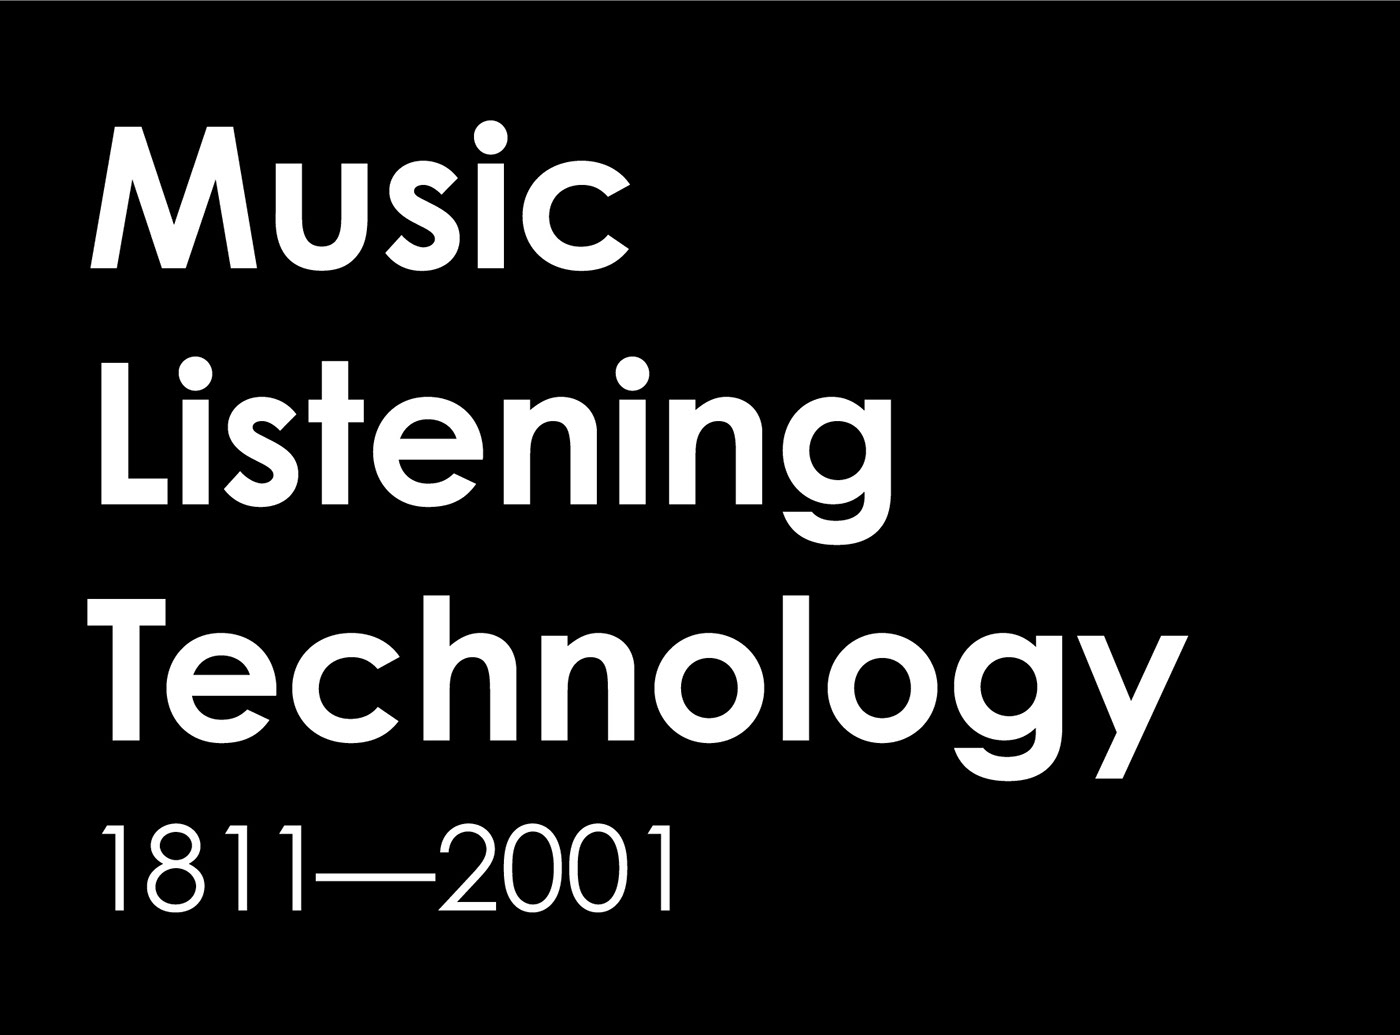 timeline music information information design Technology listening